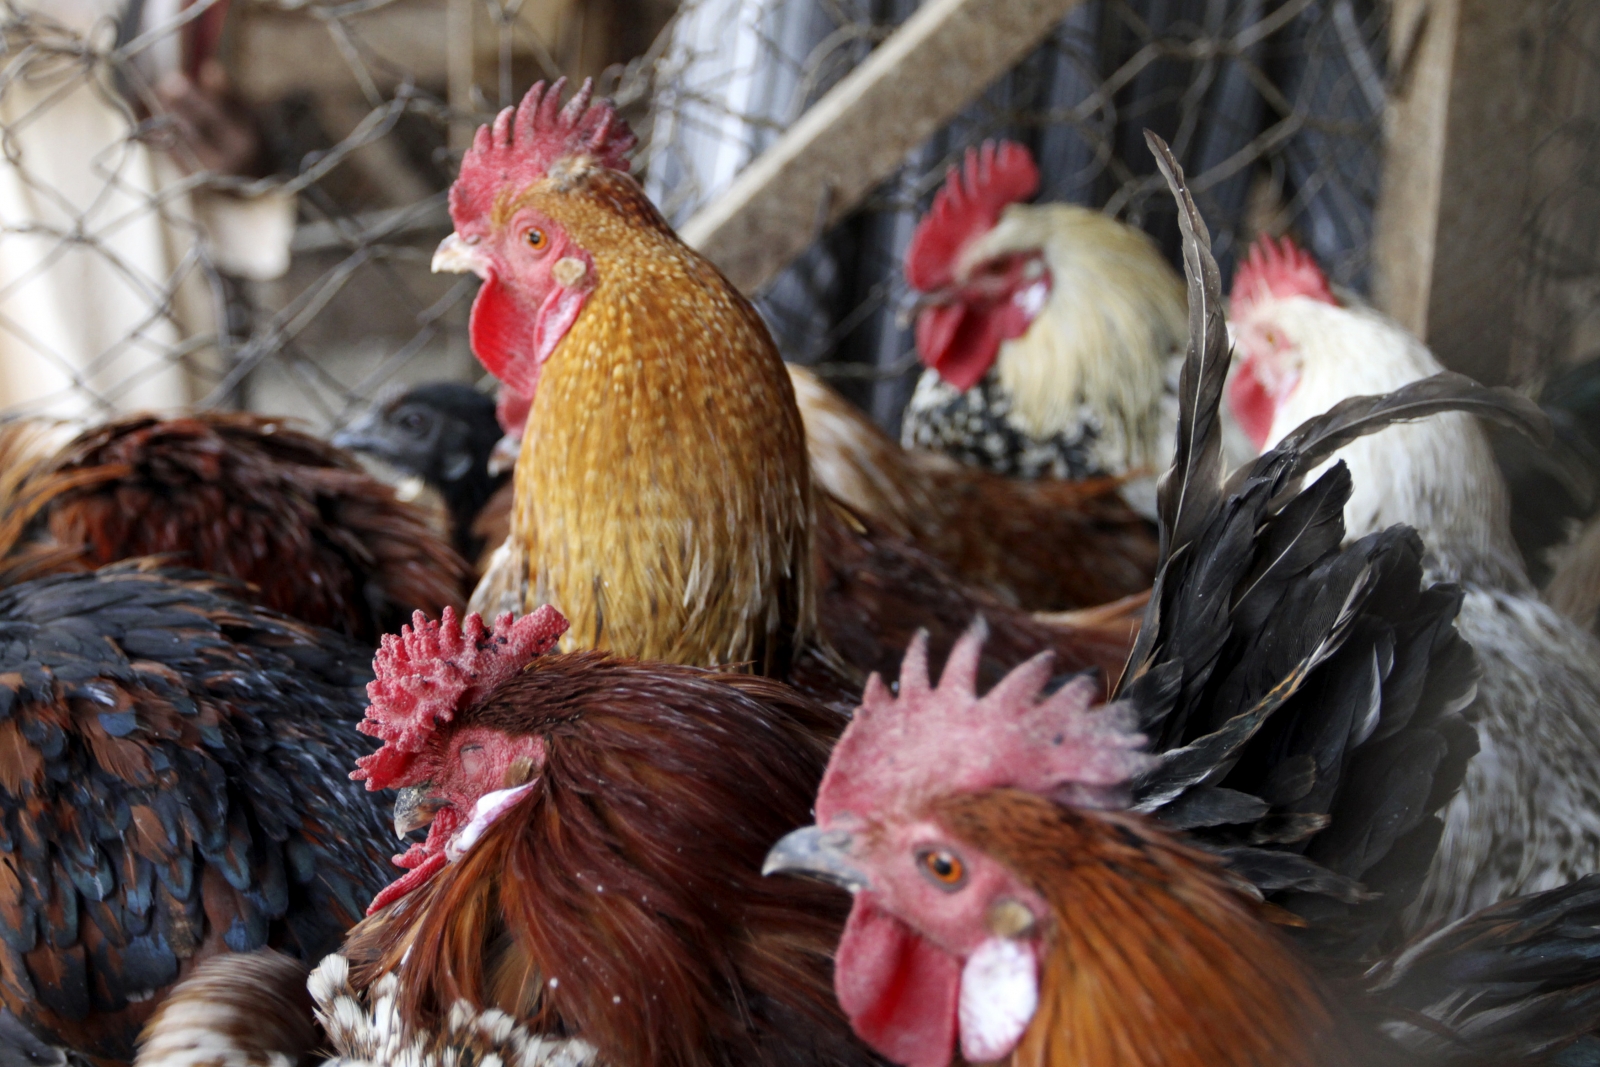 170,000 birds culled in Lancaster poultry farm on avian flu suspicion